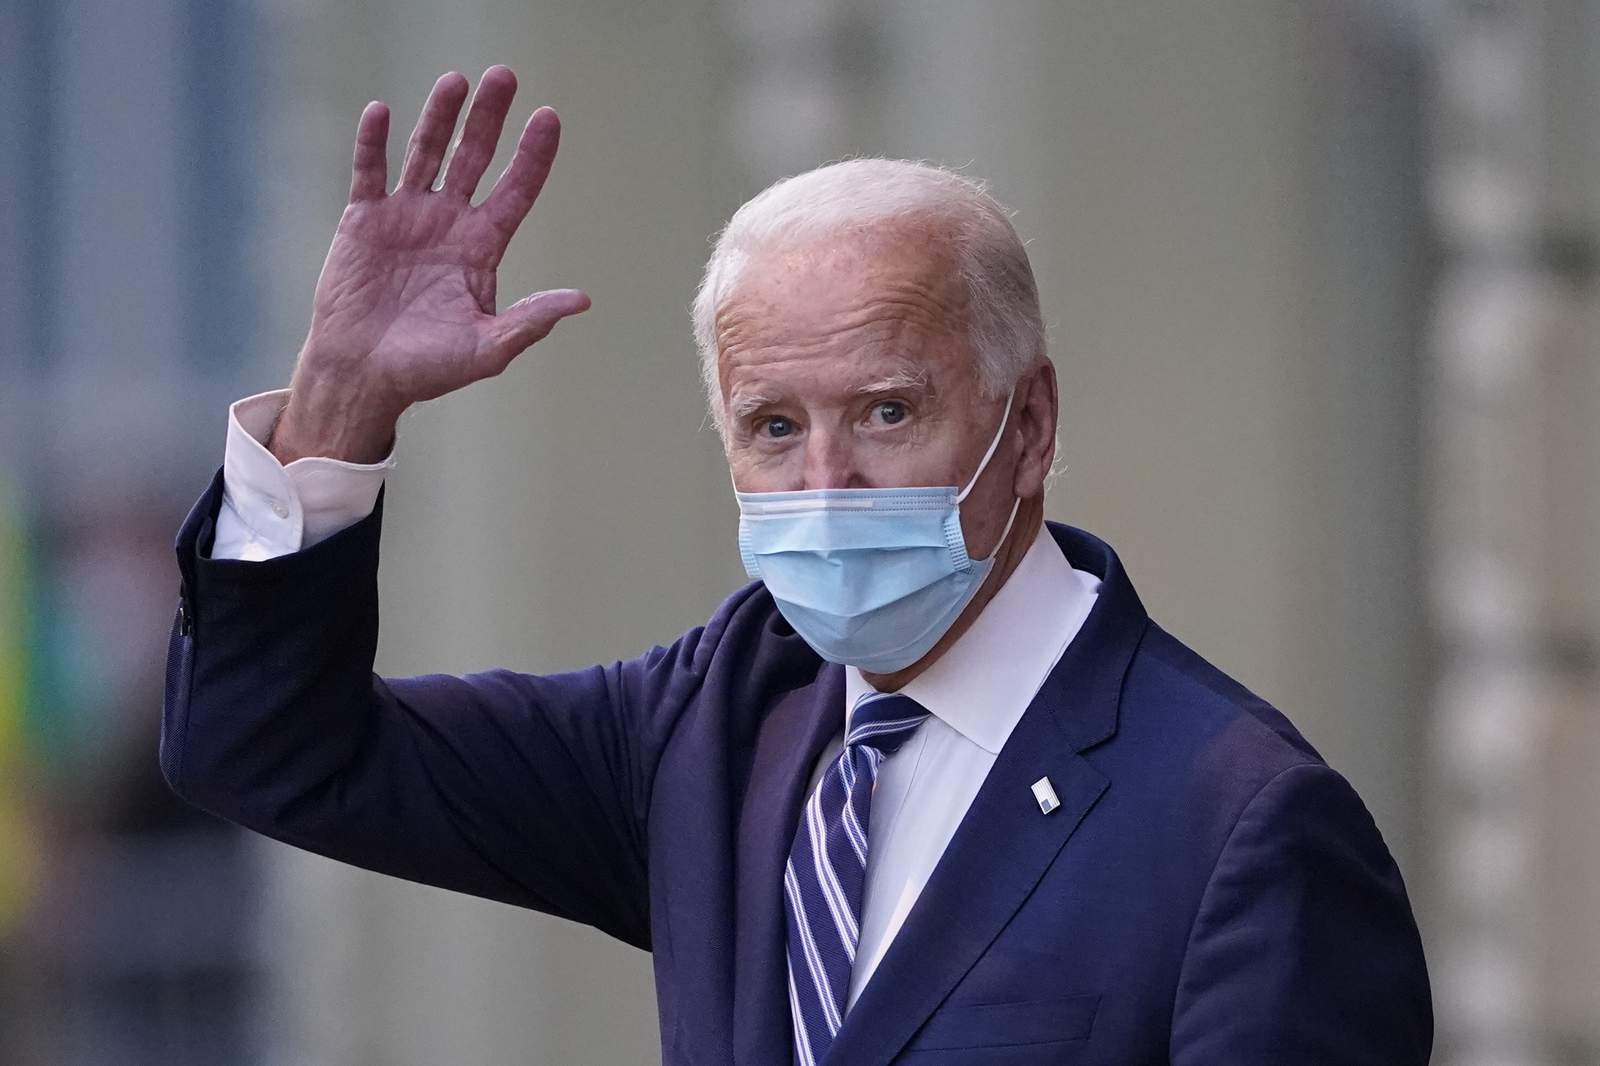 Biden faces tough choice of whether to back virus lockdowns